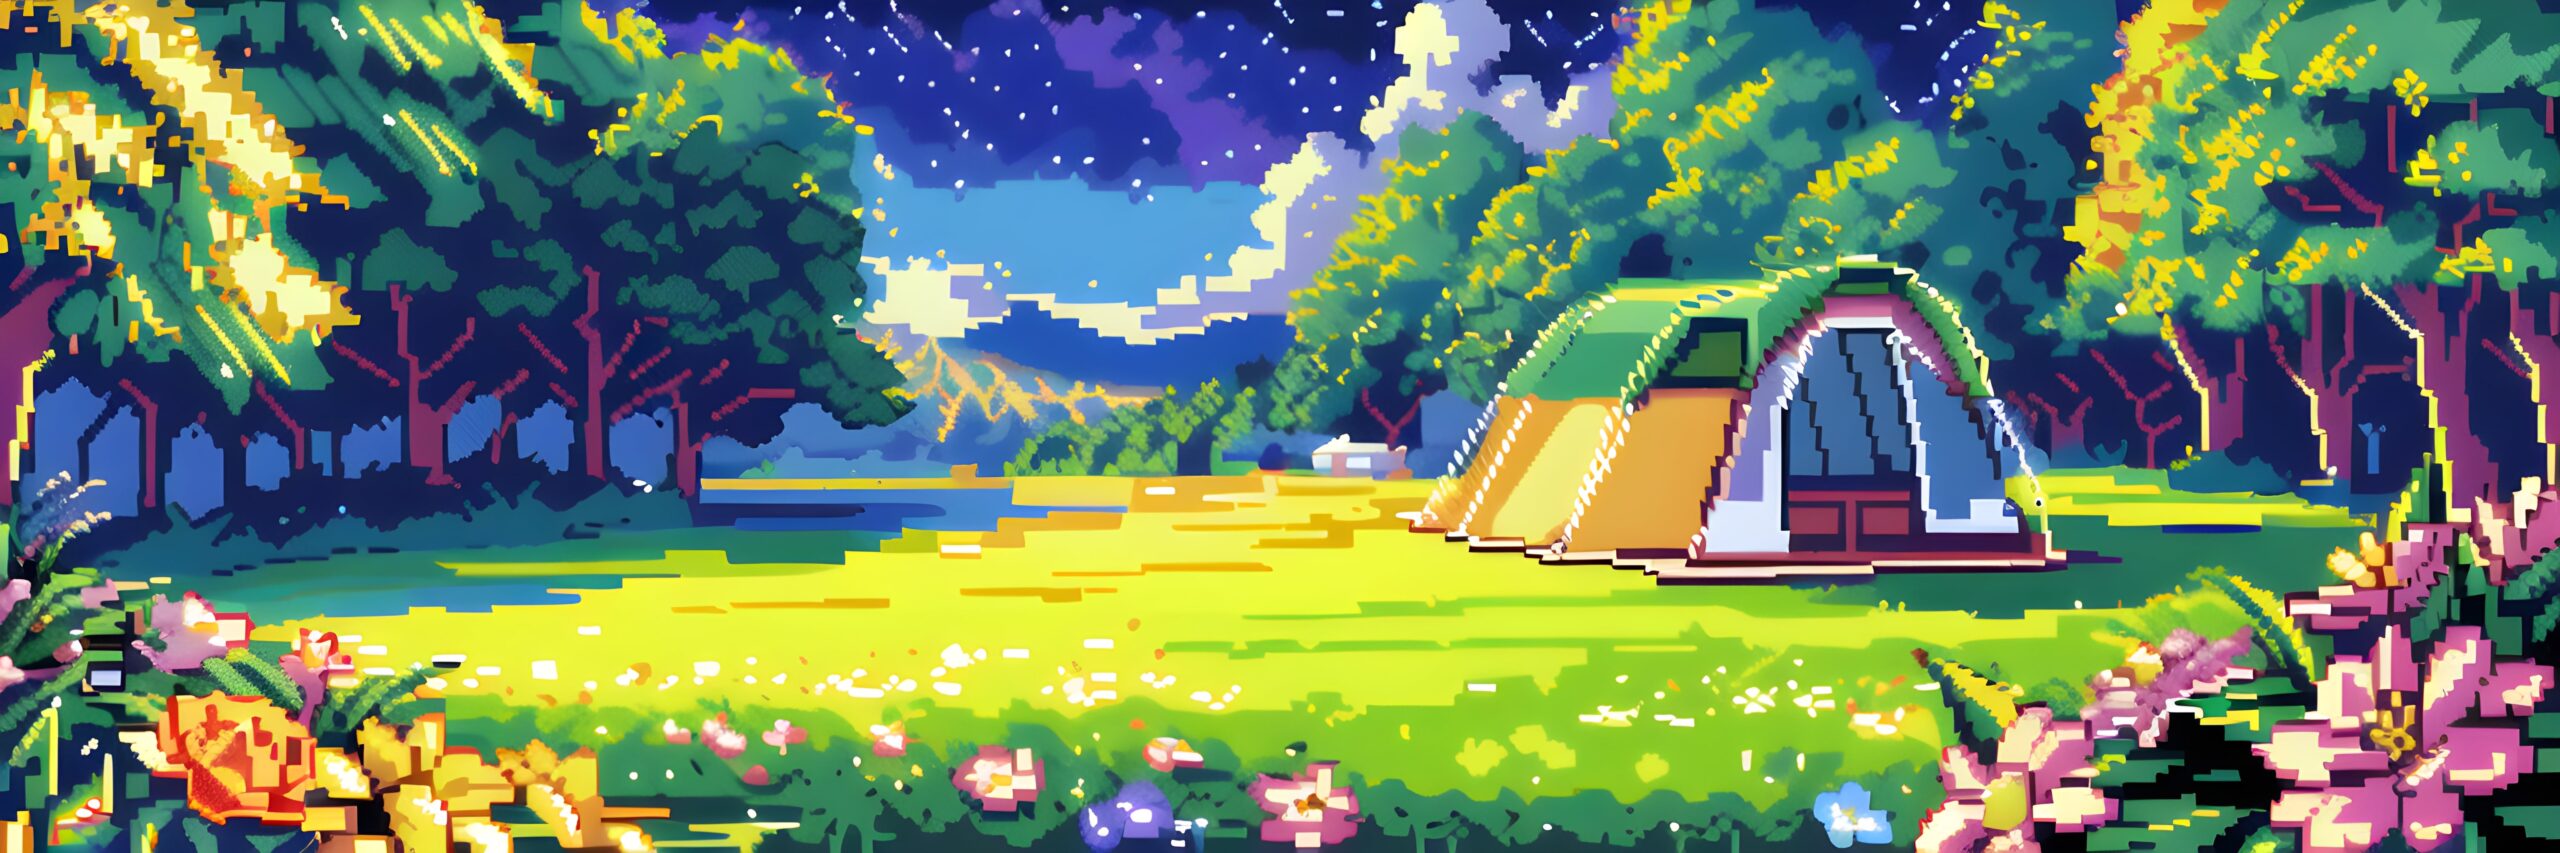 PixelArt Camping